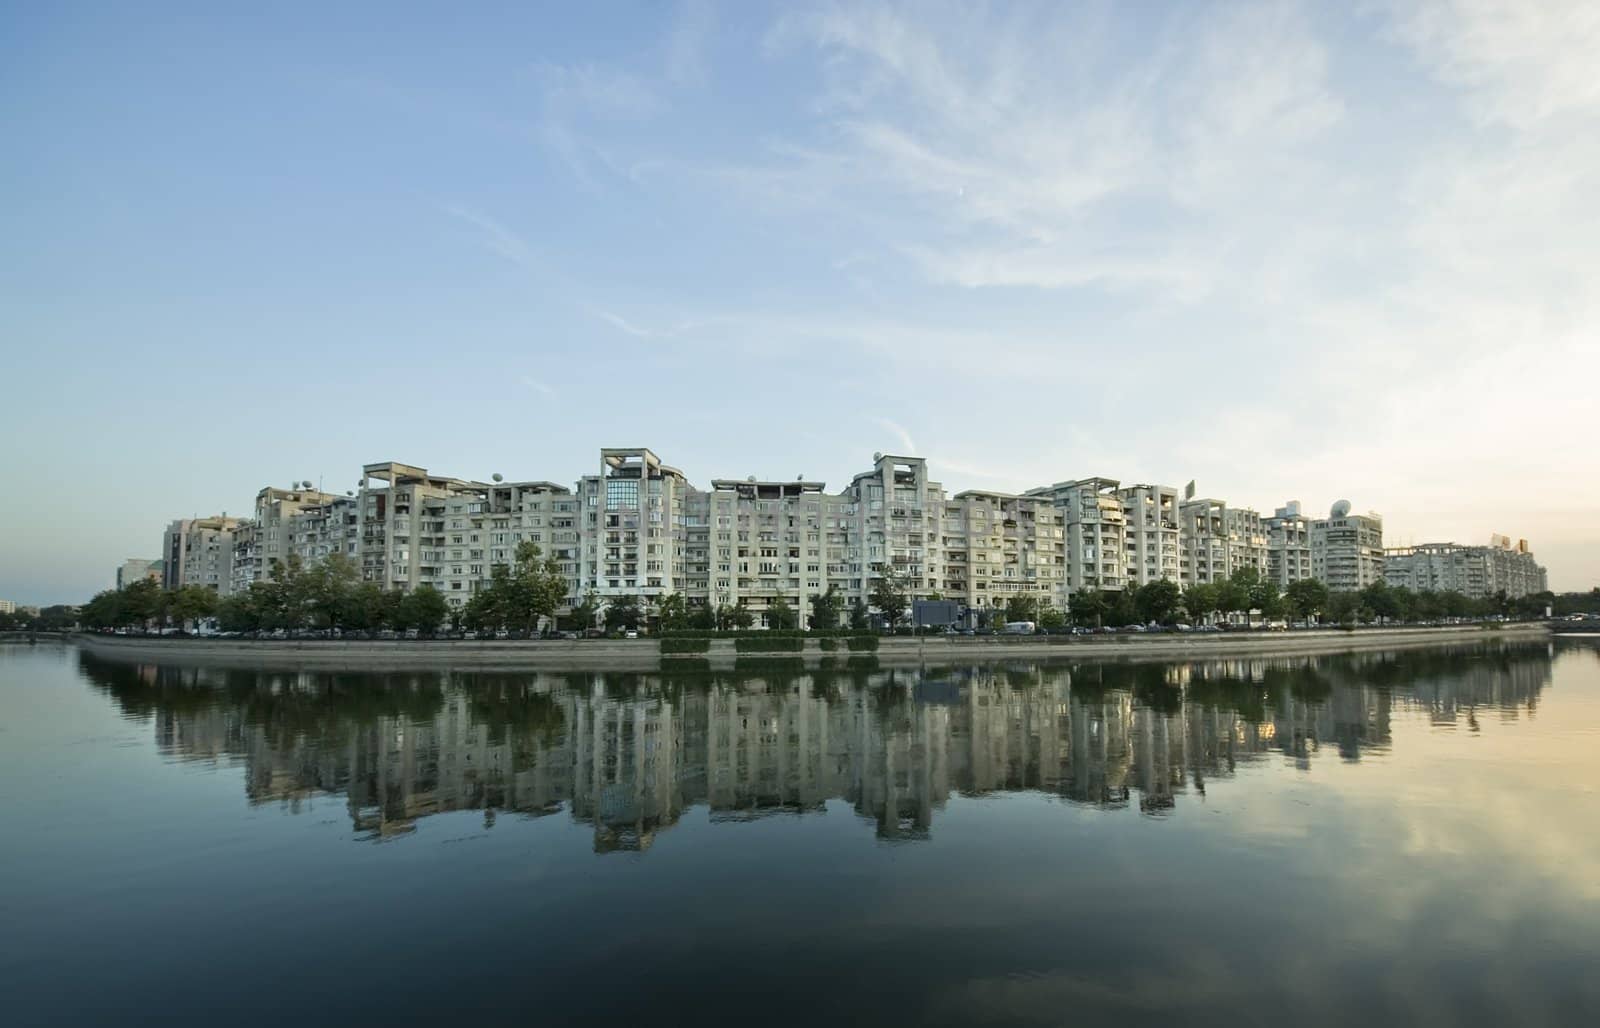 Dambovita river and buildings reflected in water, Bucharest  Romania